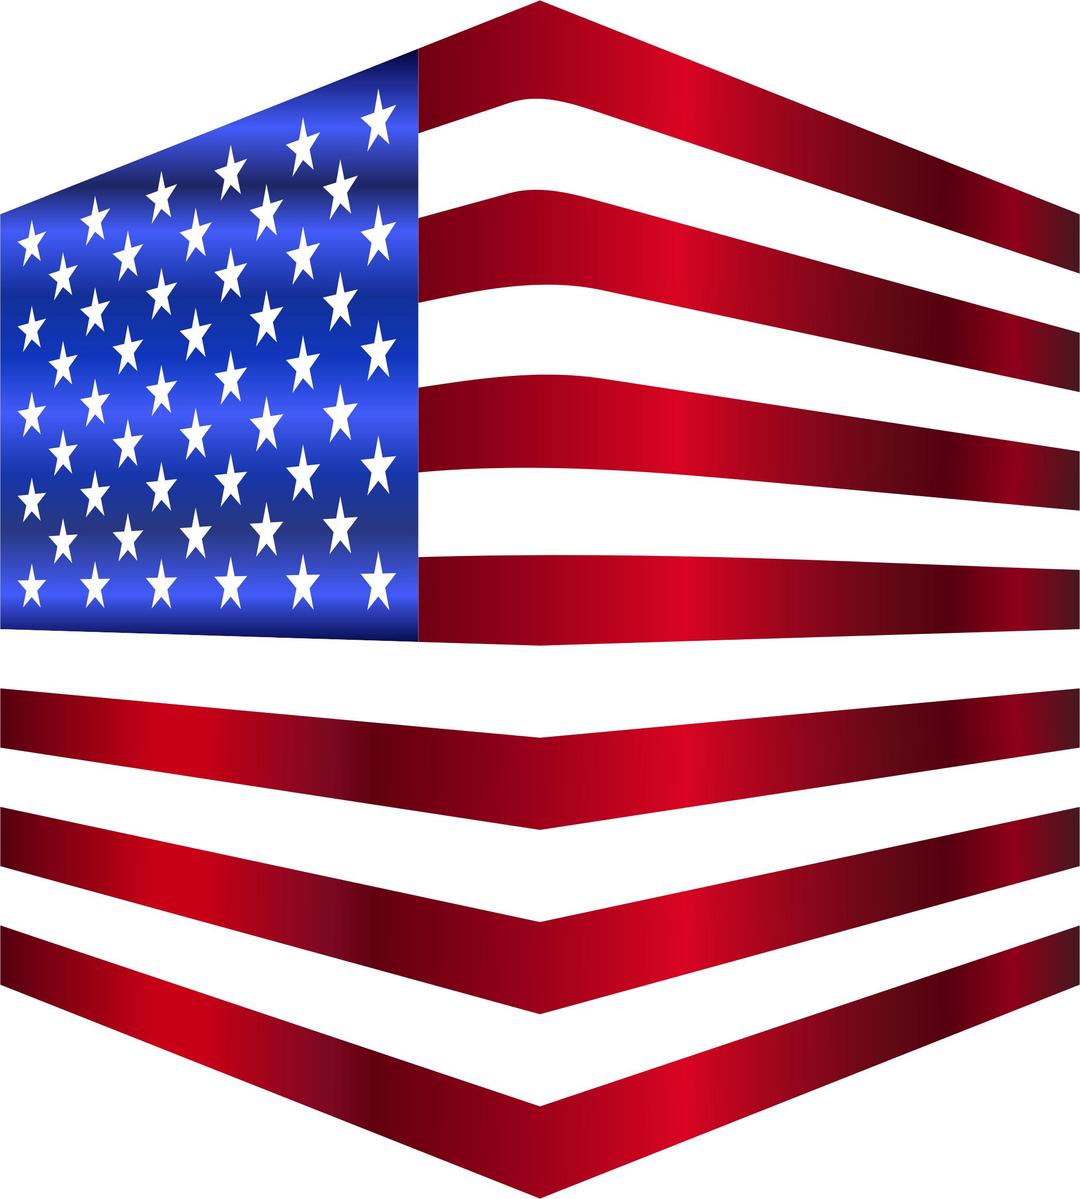 USA Flag Cube png transparent